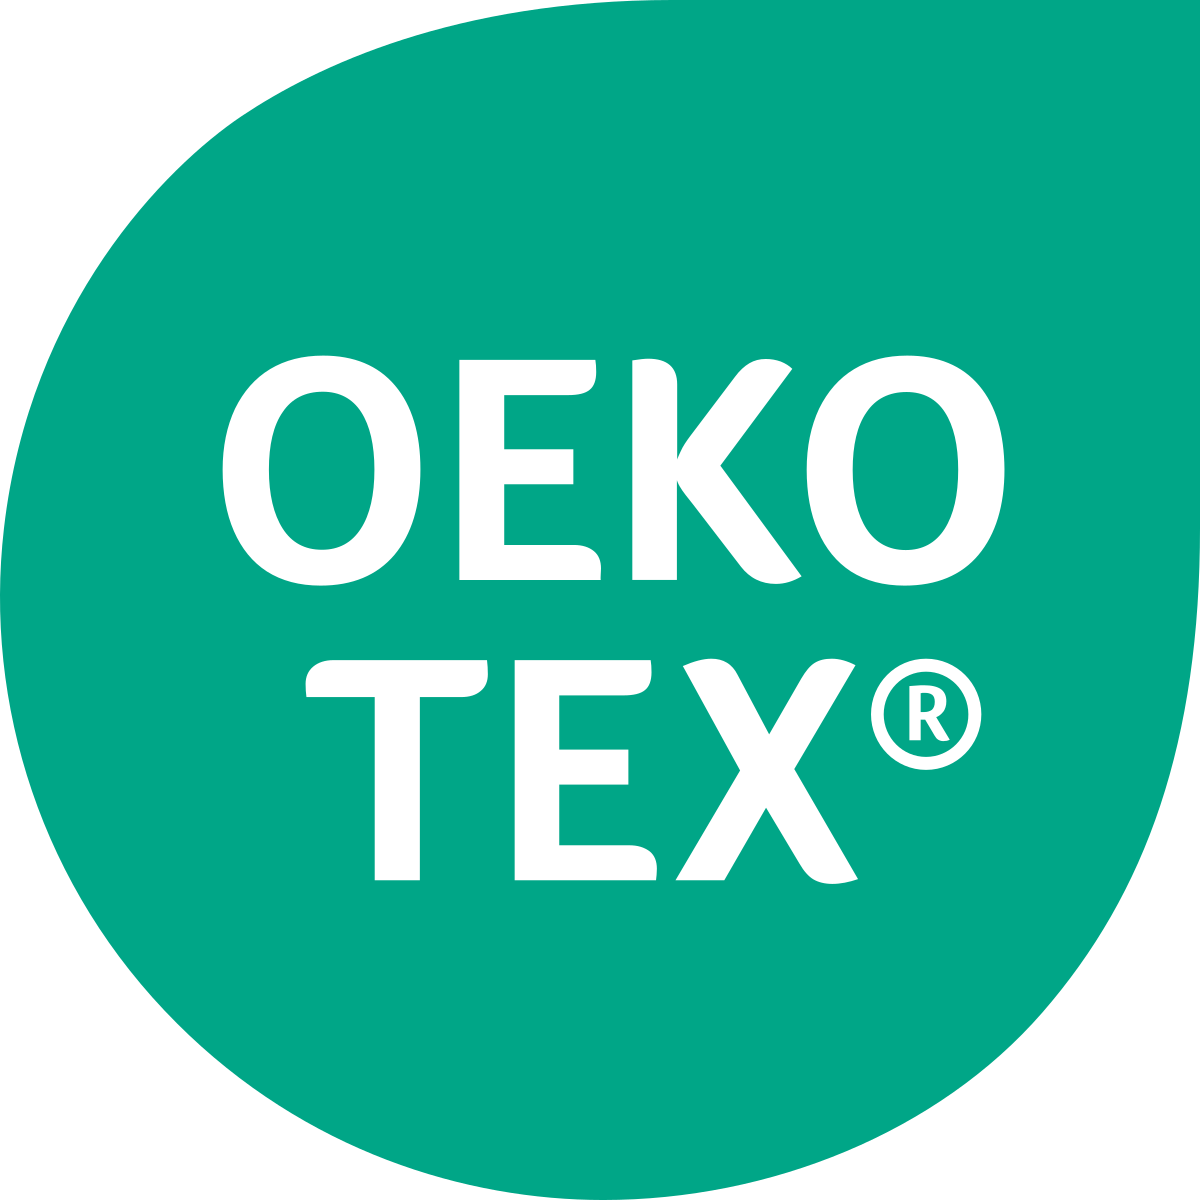 Logo Oeko tex. marques de vêtements éco responsable